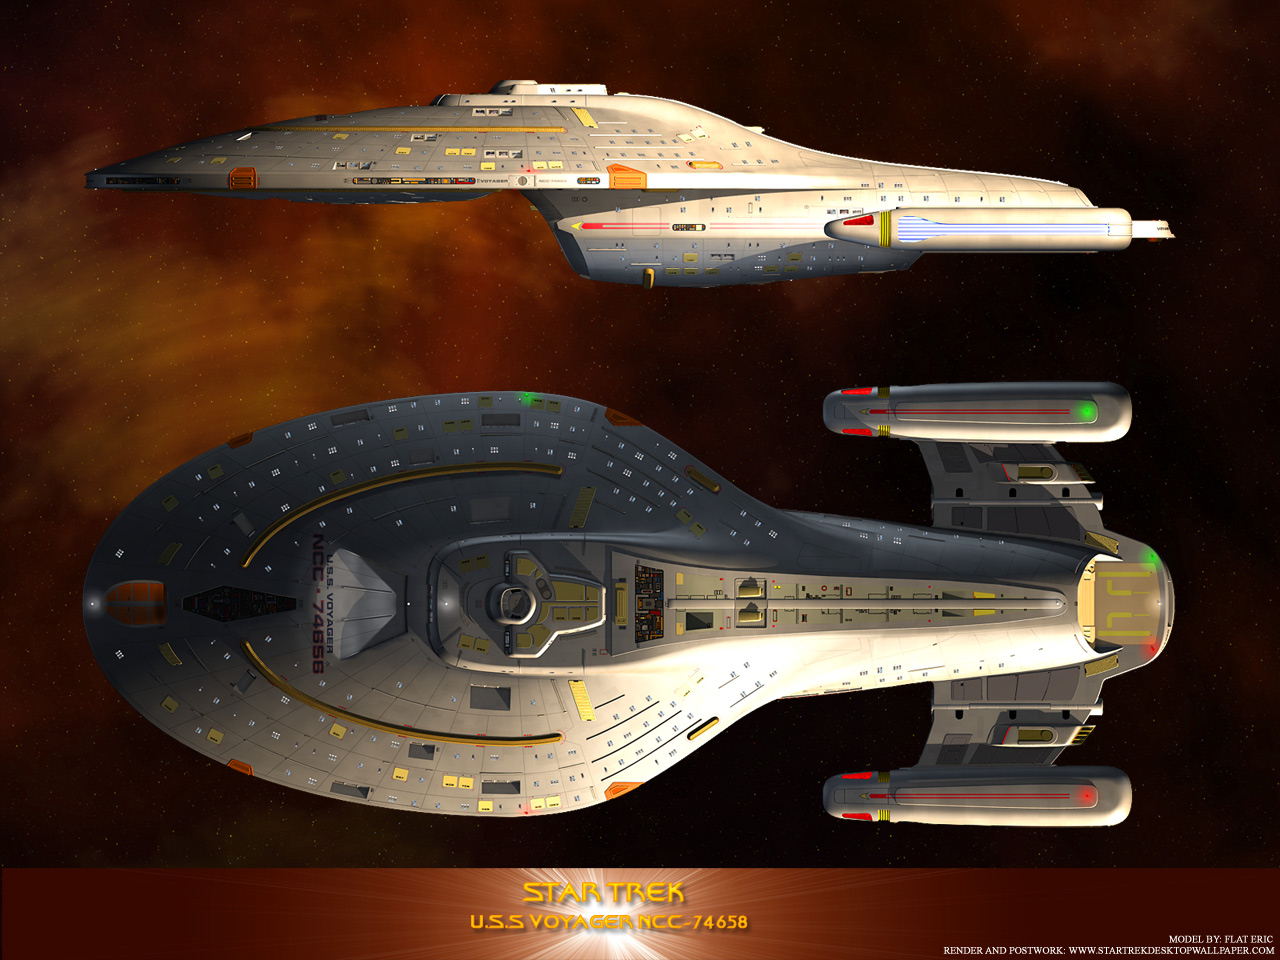 - Star Trek USS Voyager NCC74656 - free Star Trek computer desktop wallpaper, pictures, images.